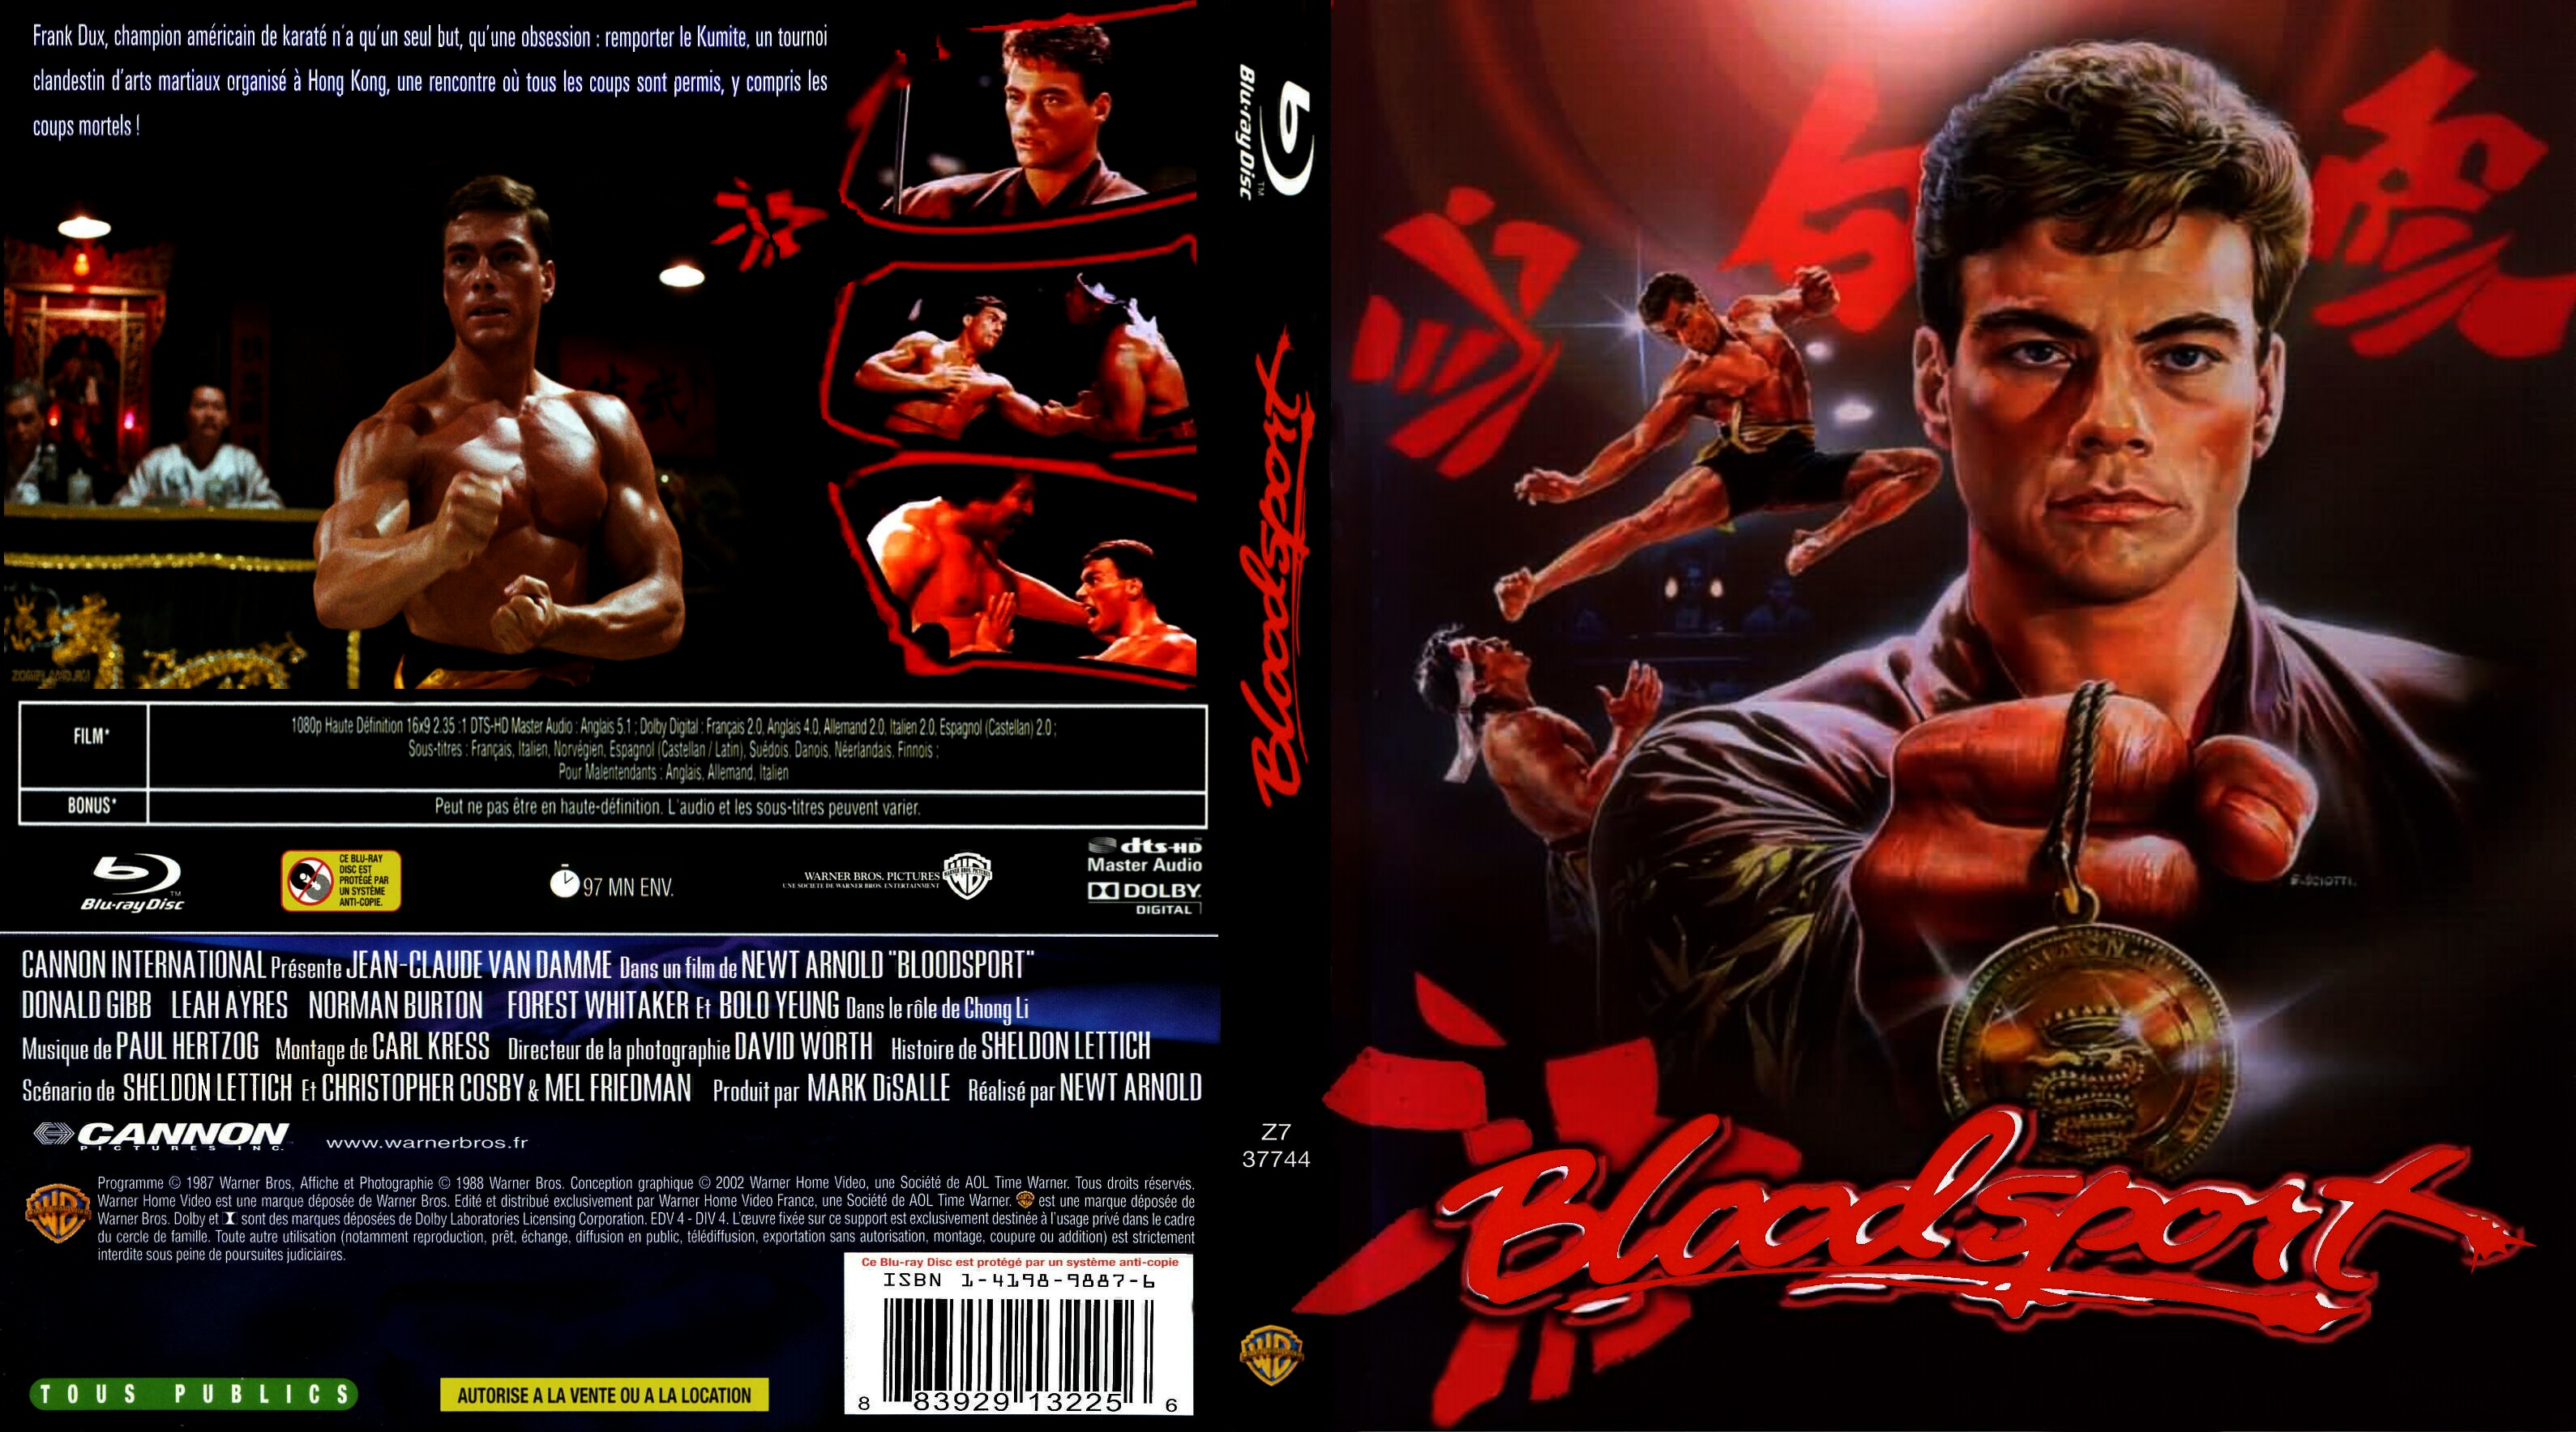 Jaquette DVD Bloodsport custom (BLU-RAY)